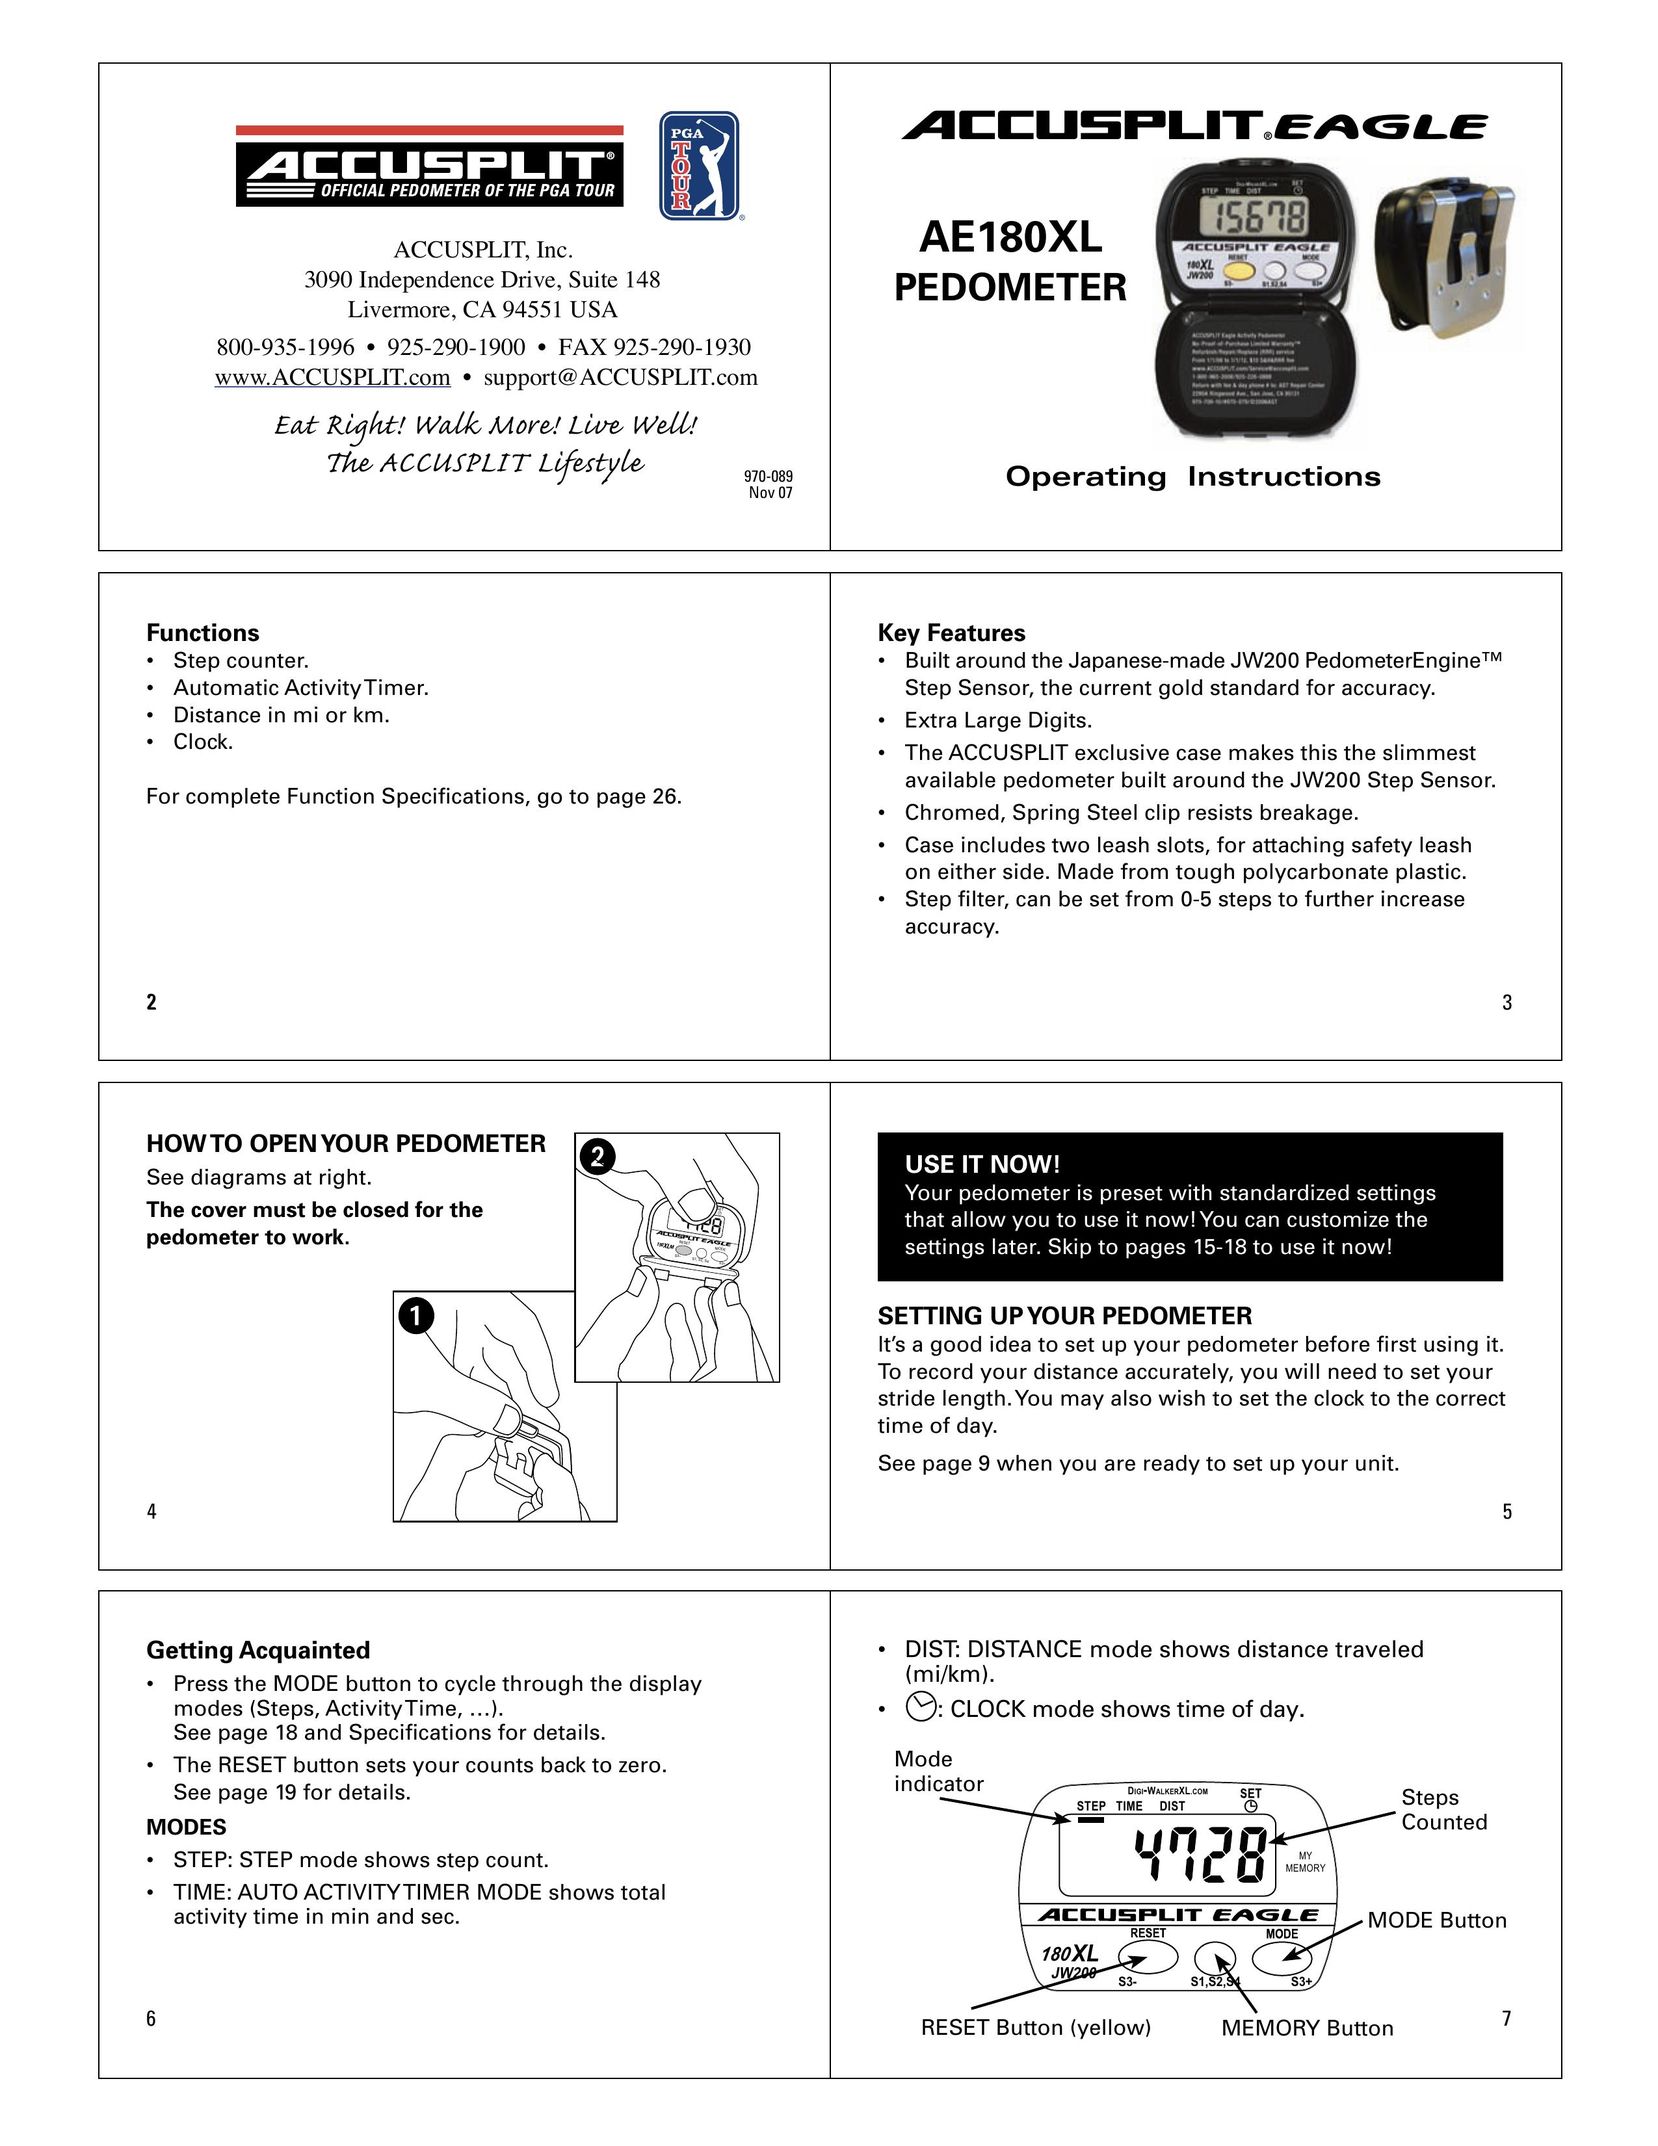 Accusplit AE180XL Fitness Electronics User Manual